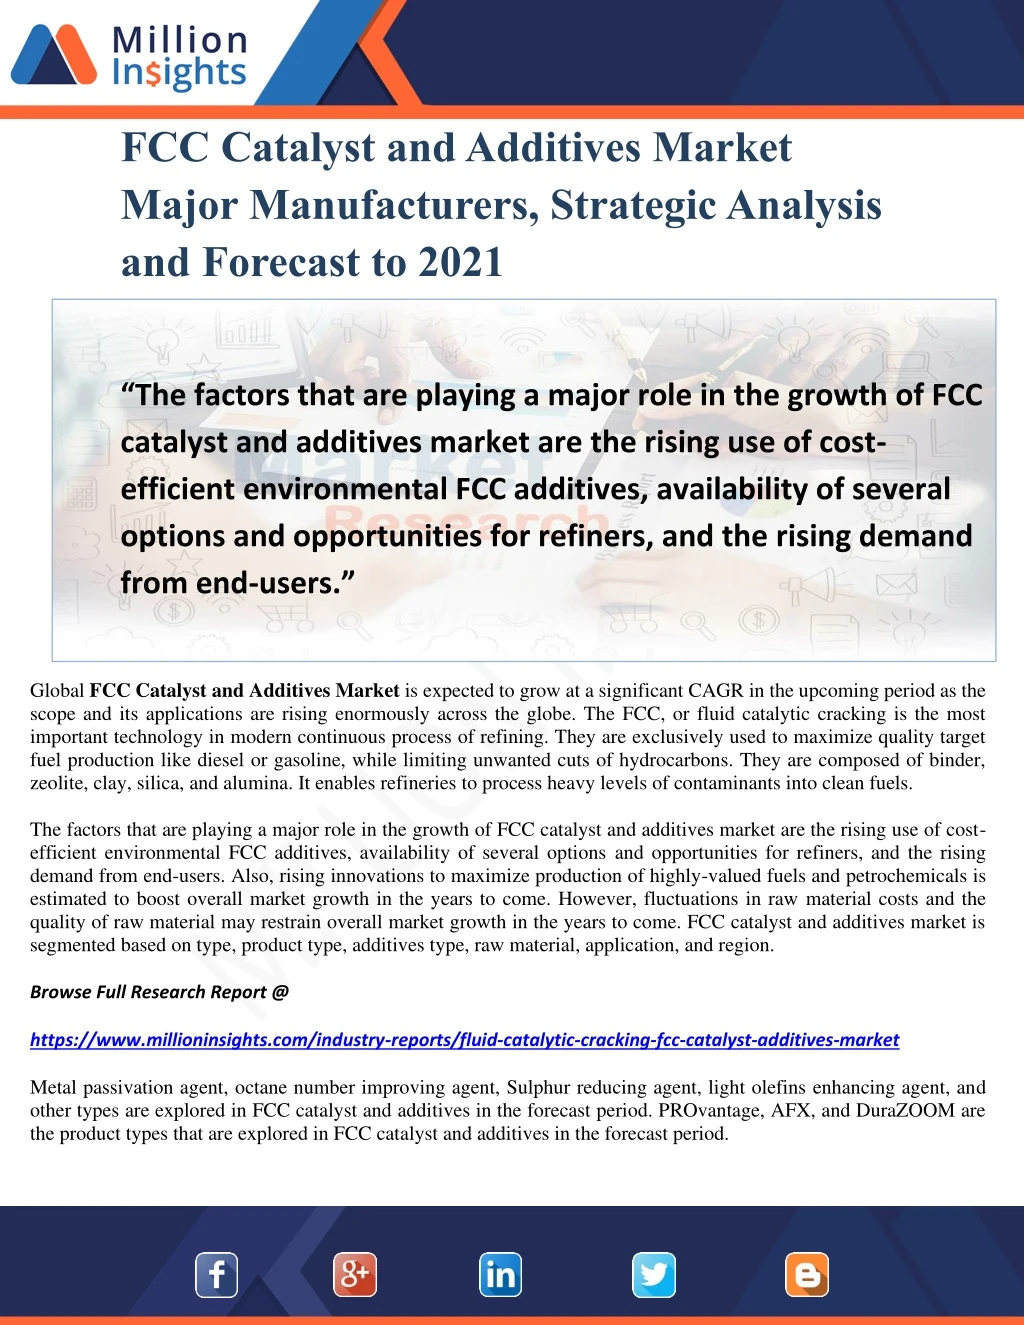 fcc catalyst and additives market major